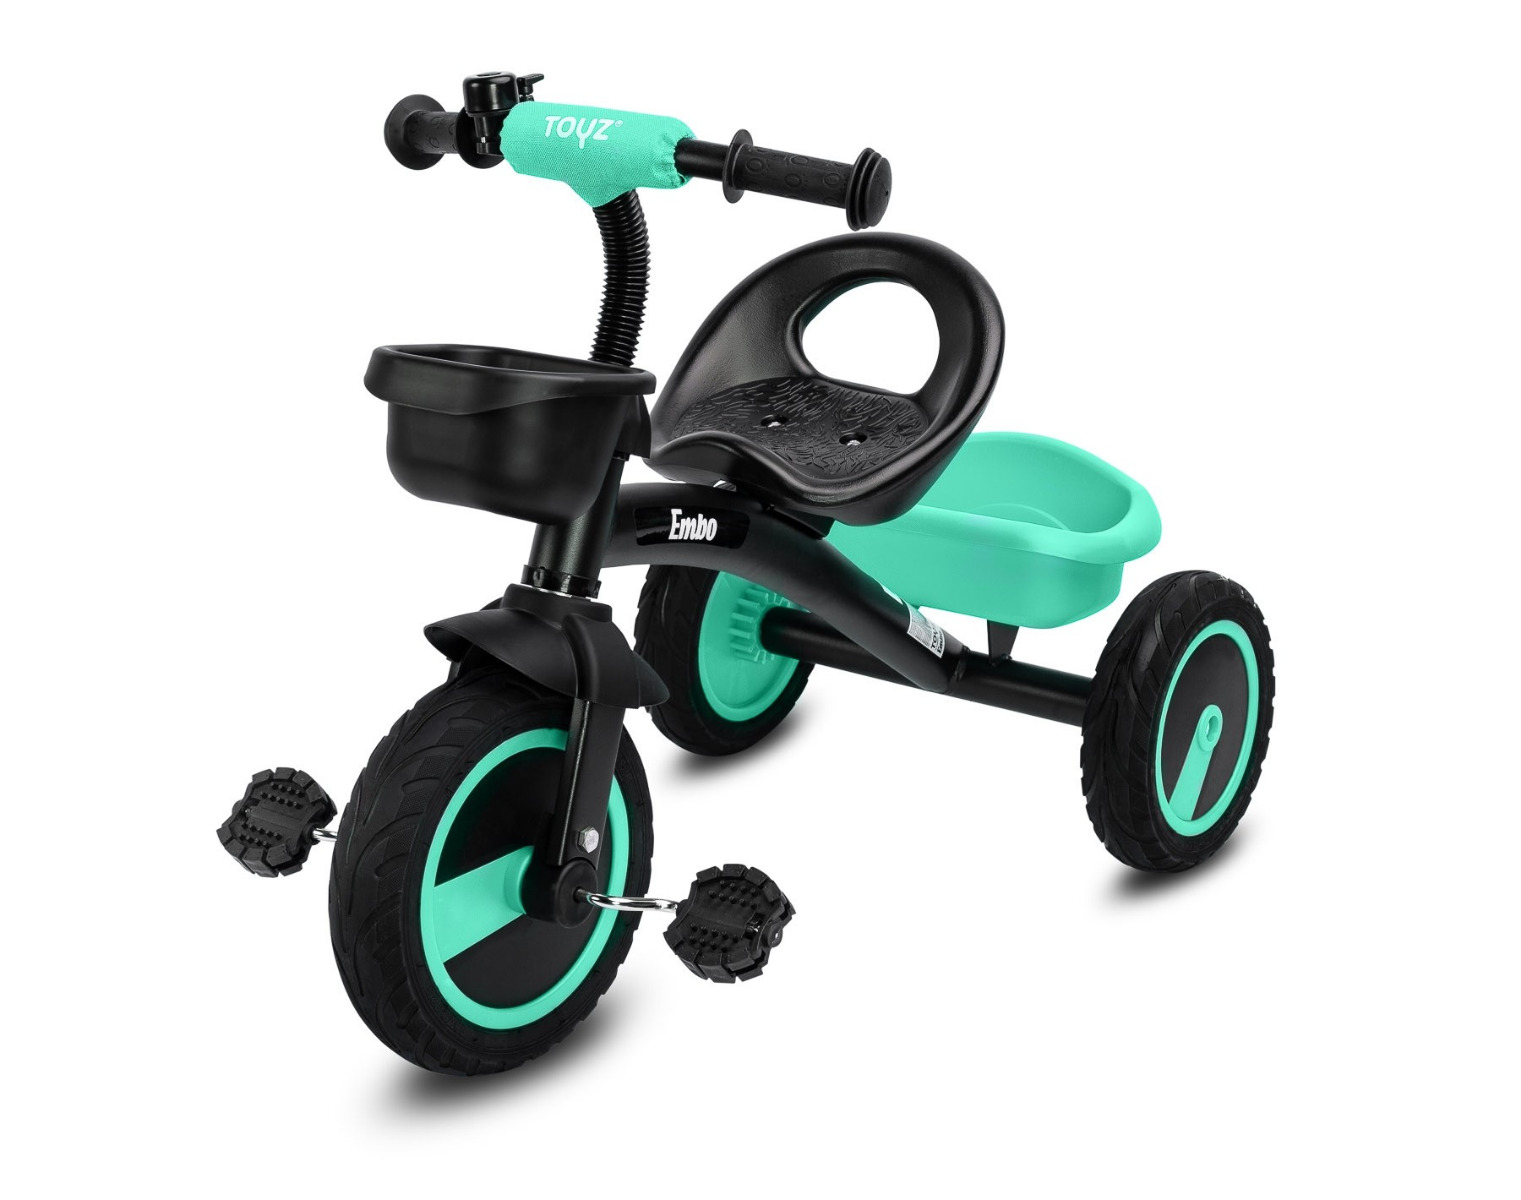 Tricicleta pentru copii Toyz EMBO Turcoaz image 12